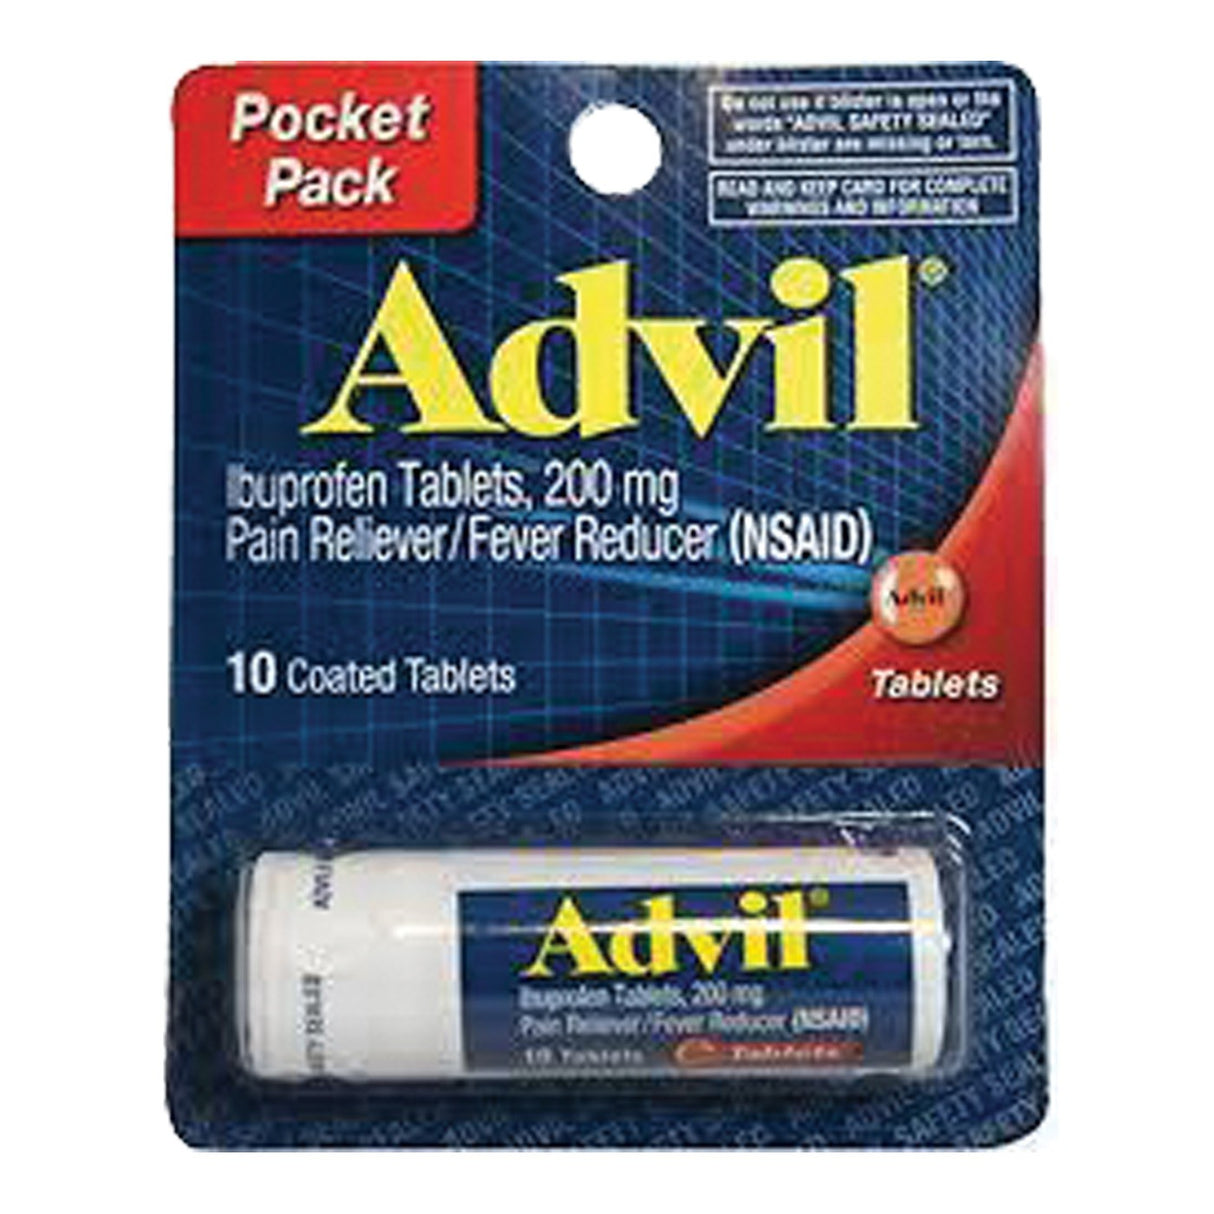 Advil 200mg - 10 Tablets